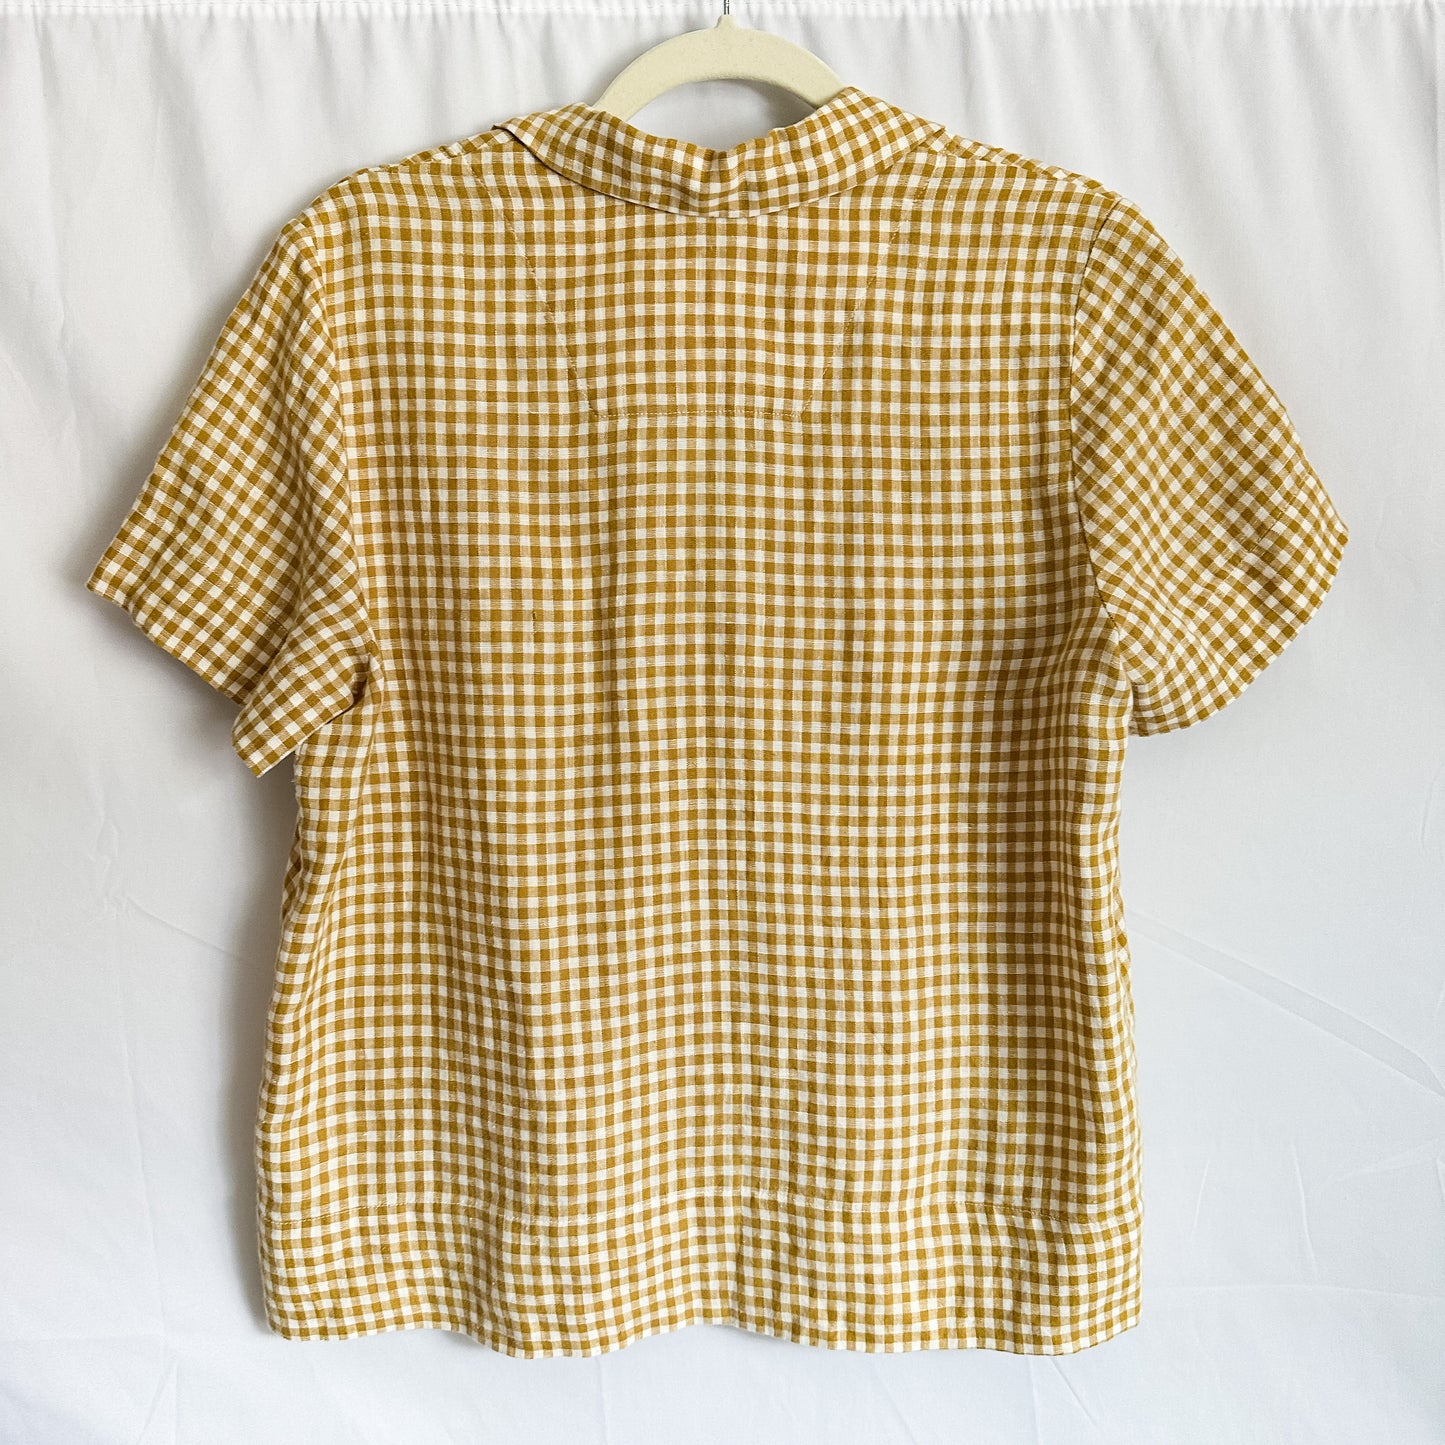 Mustard Linen Gingham Short Sleeve Button Down Top (fits XS-S)